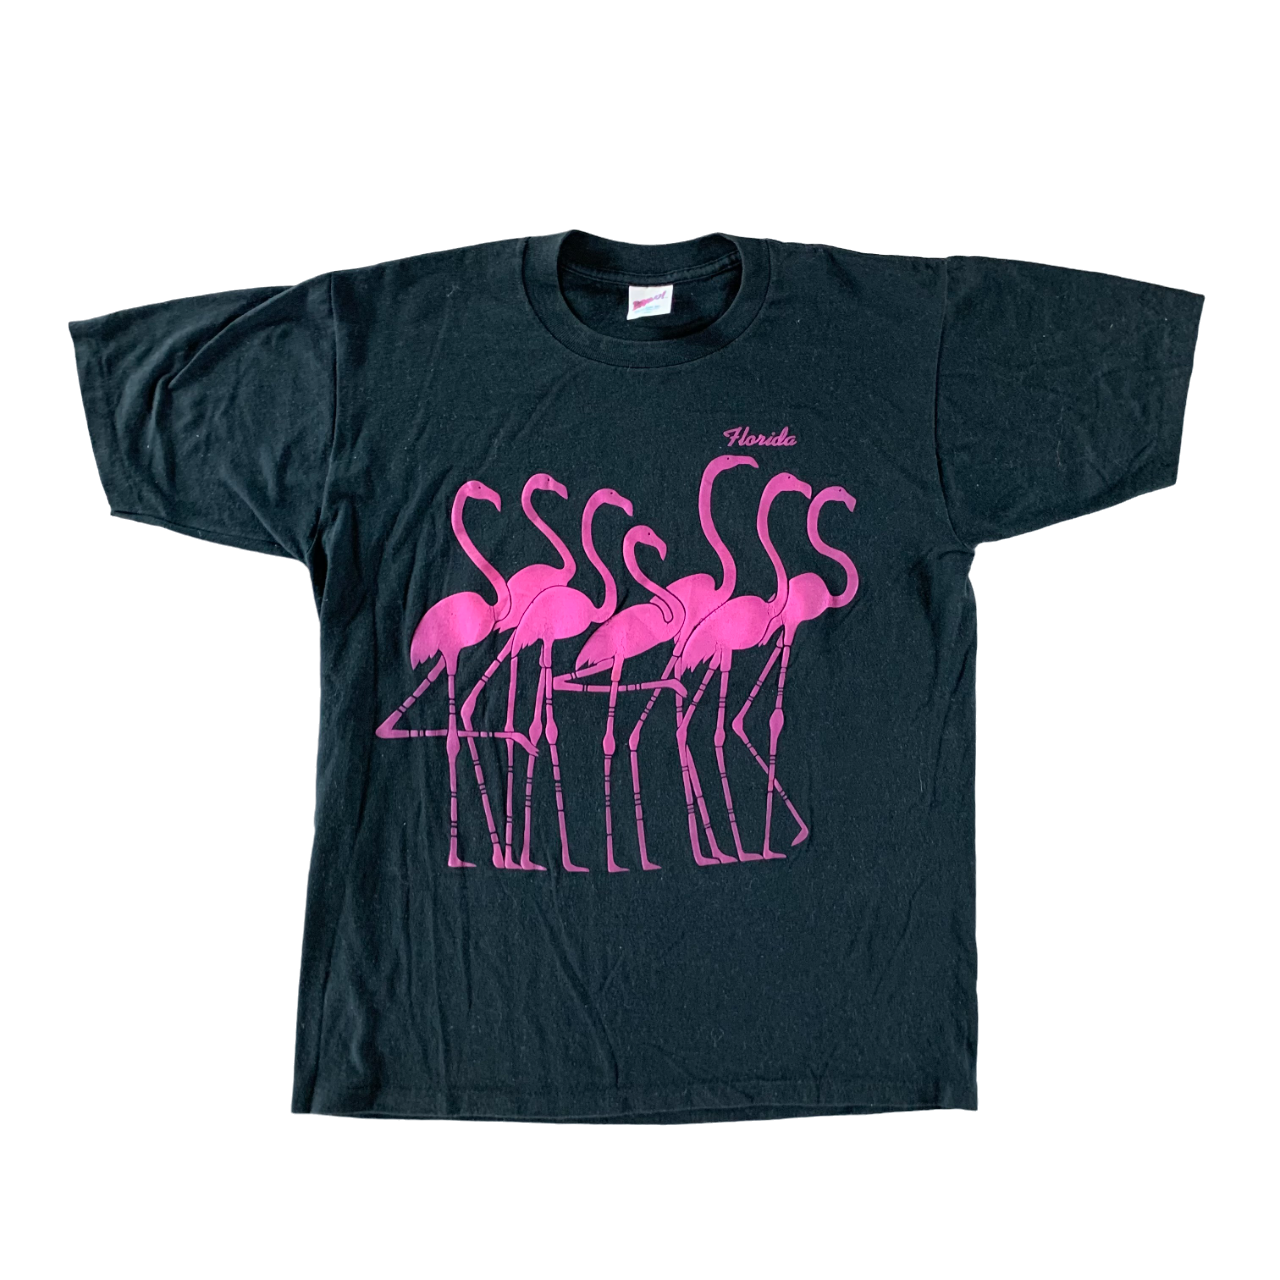 Vintage 1980s Flamingo T-shirt size Large